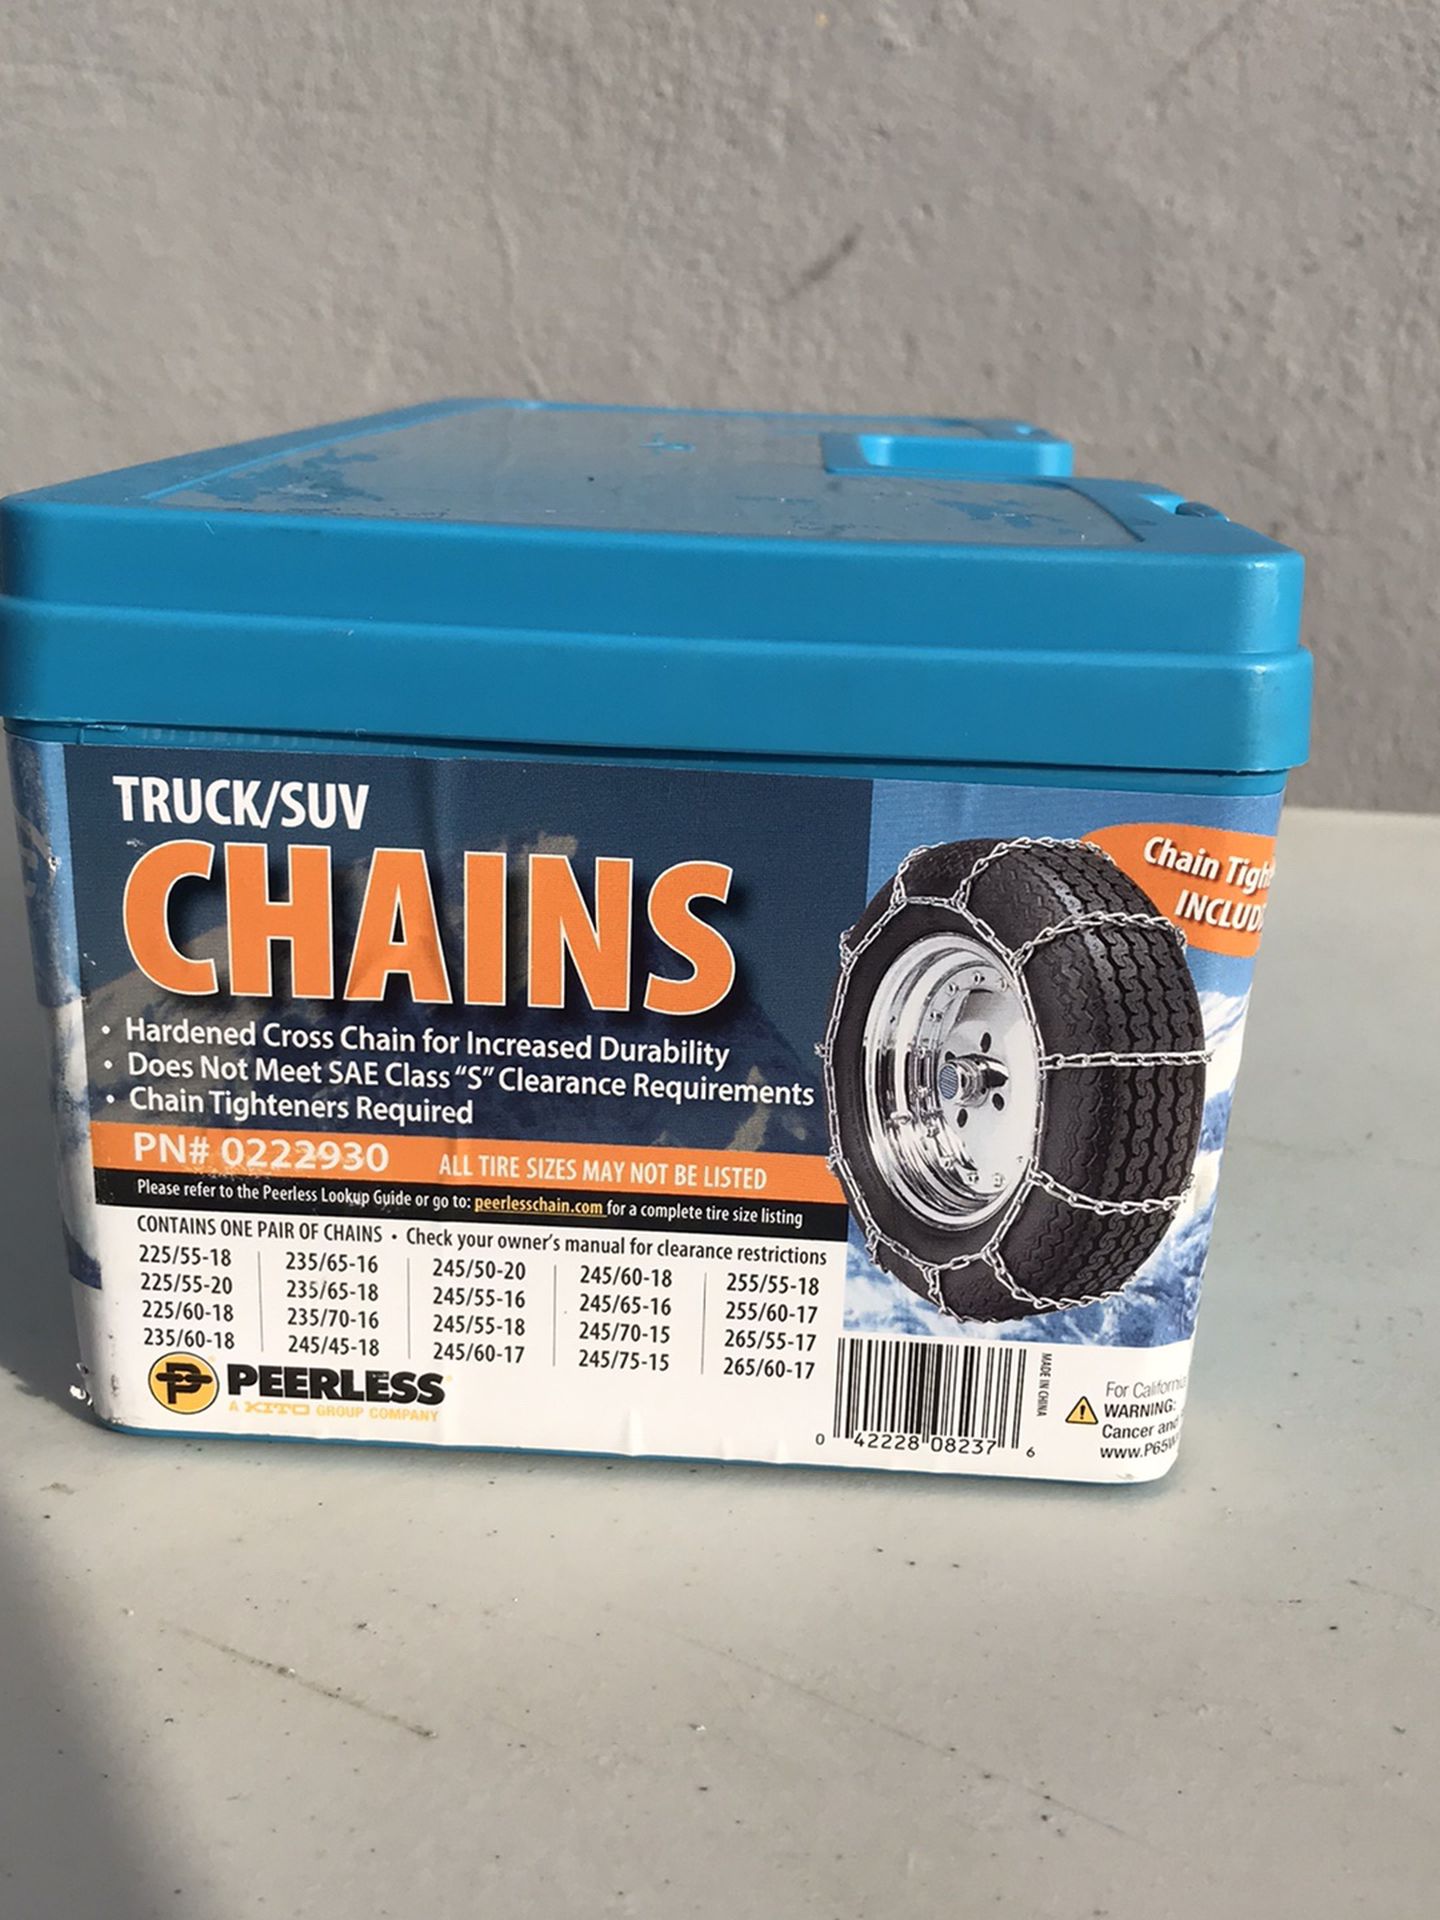 Truck /suv Chains